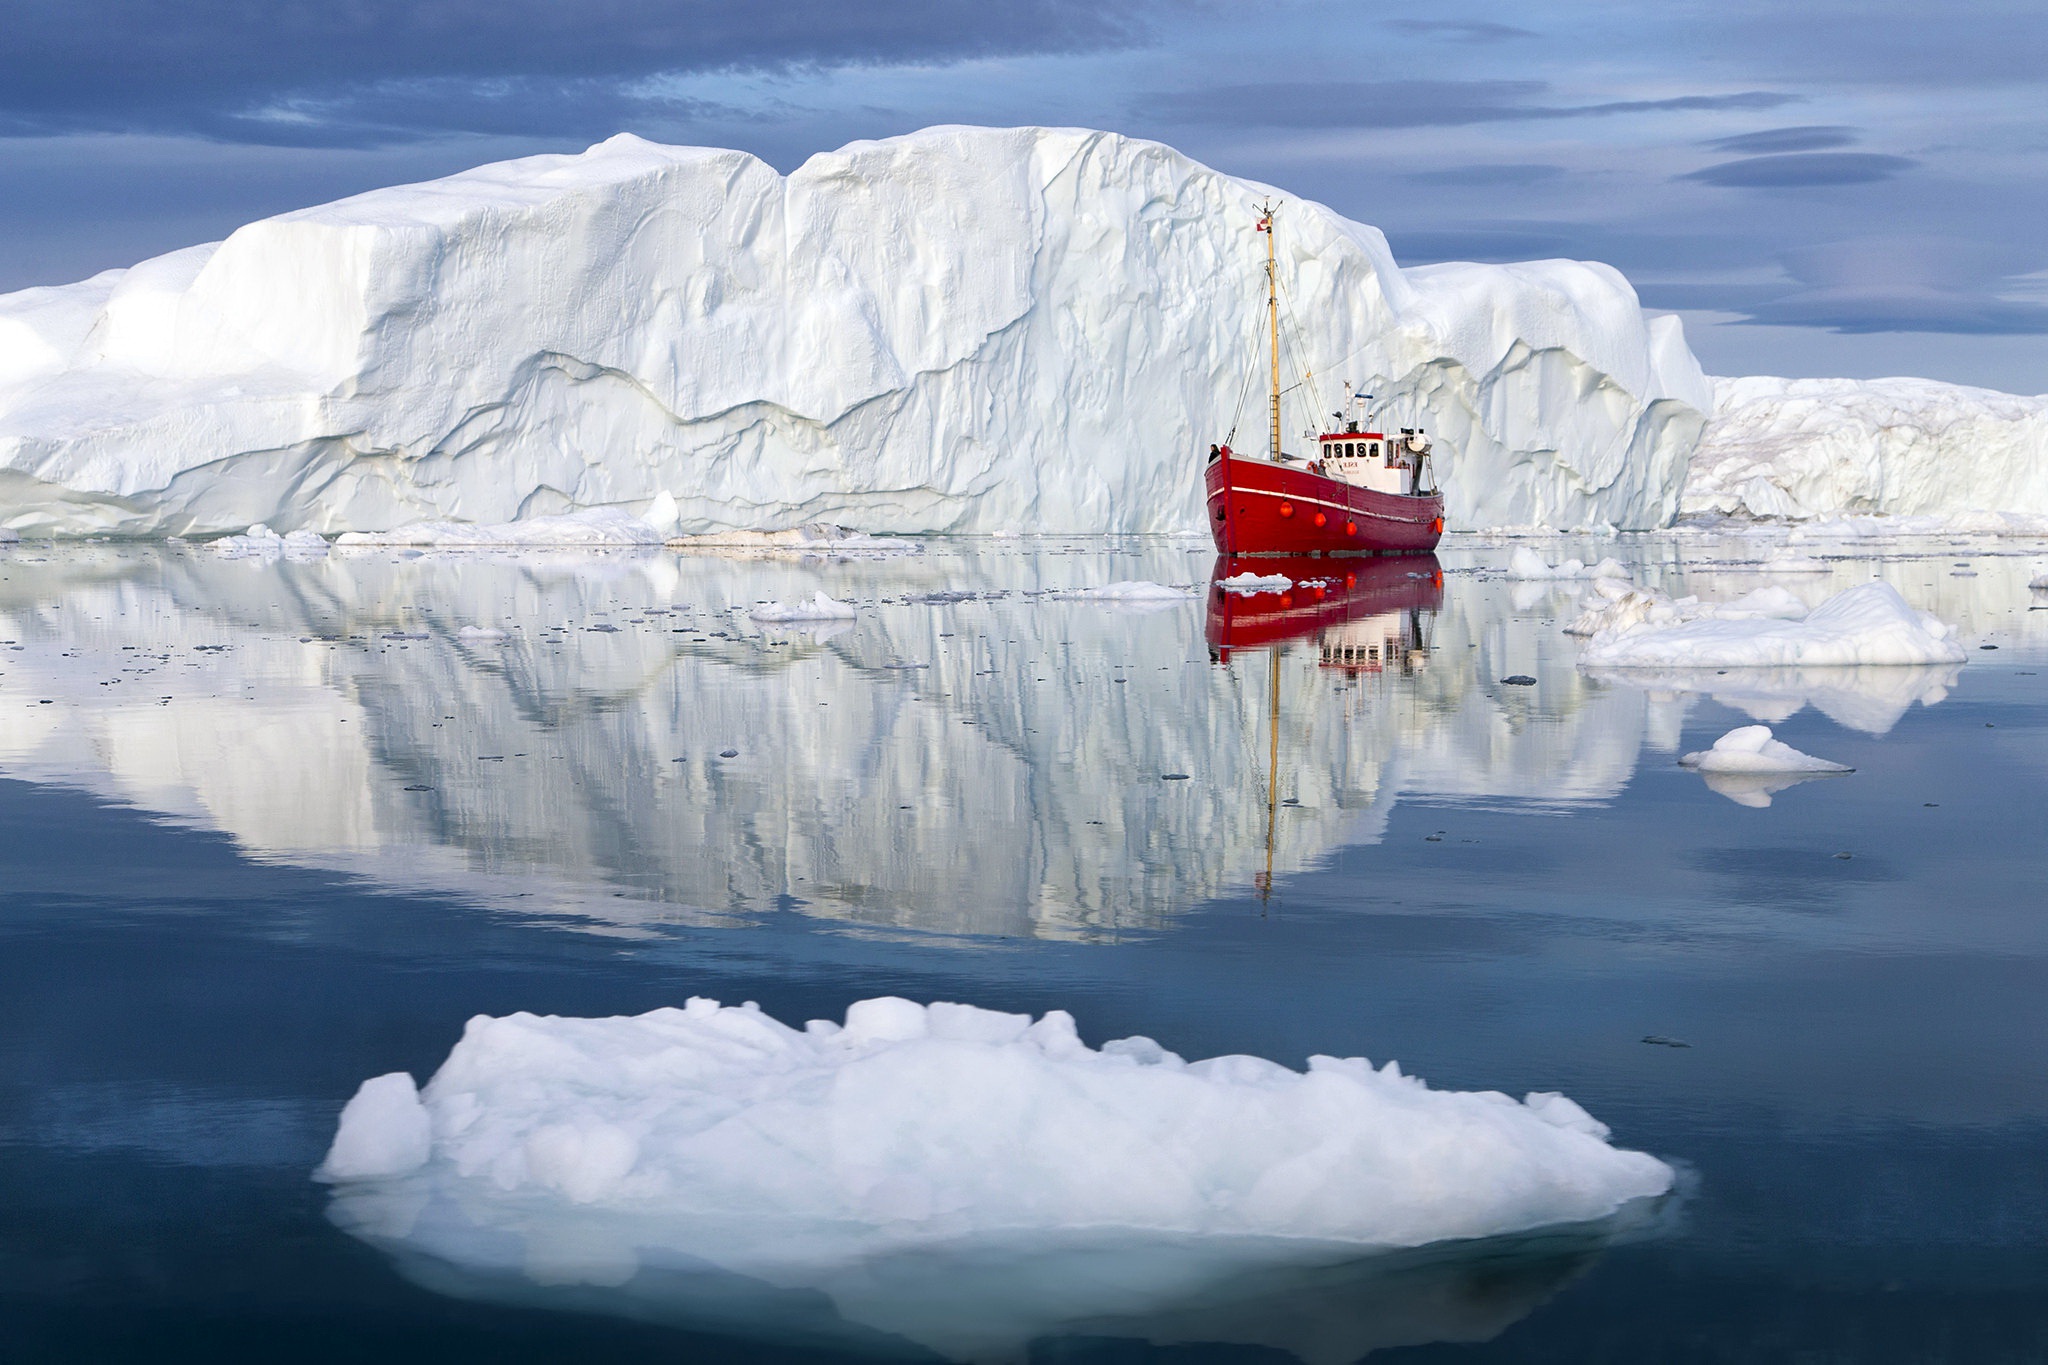 General 2048x1365 Arctic boat nature water iceberg vehicle